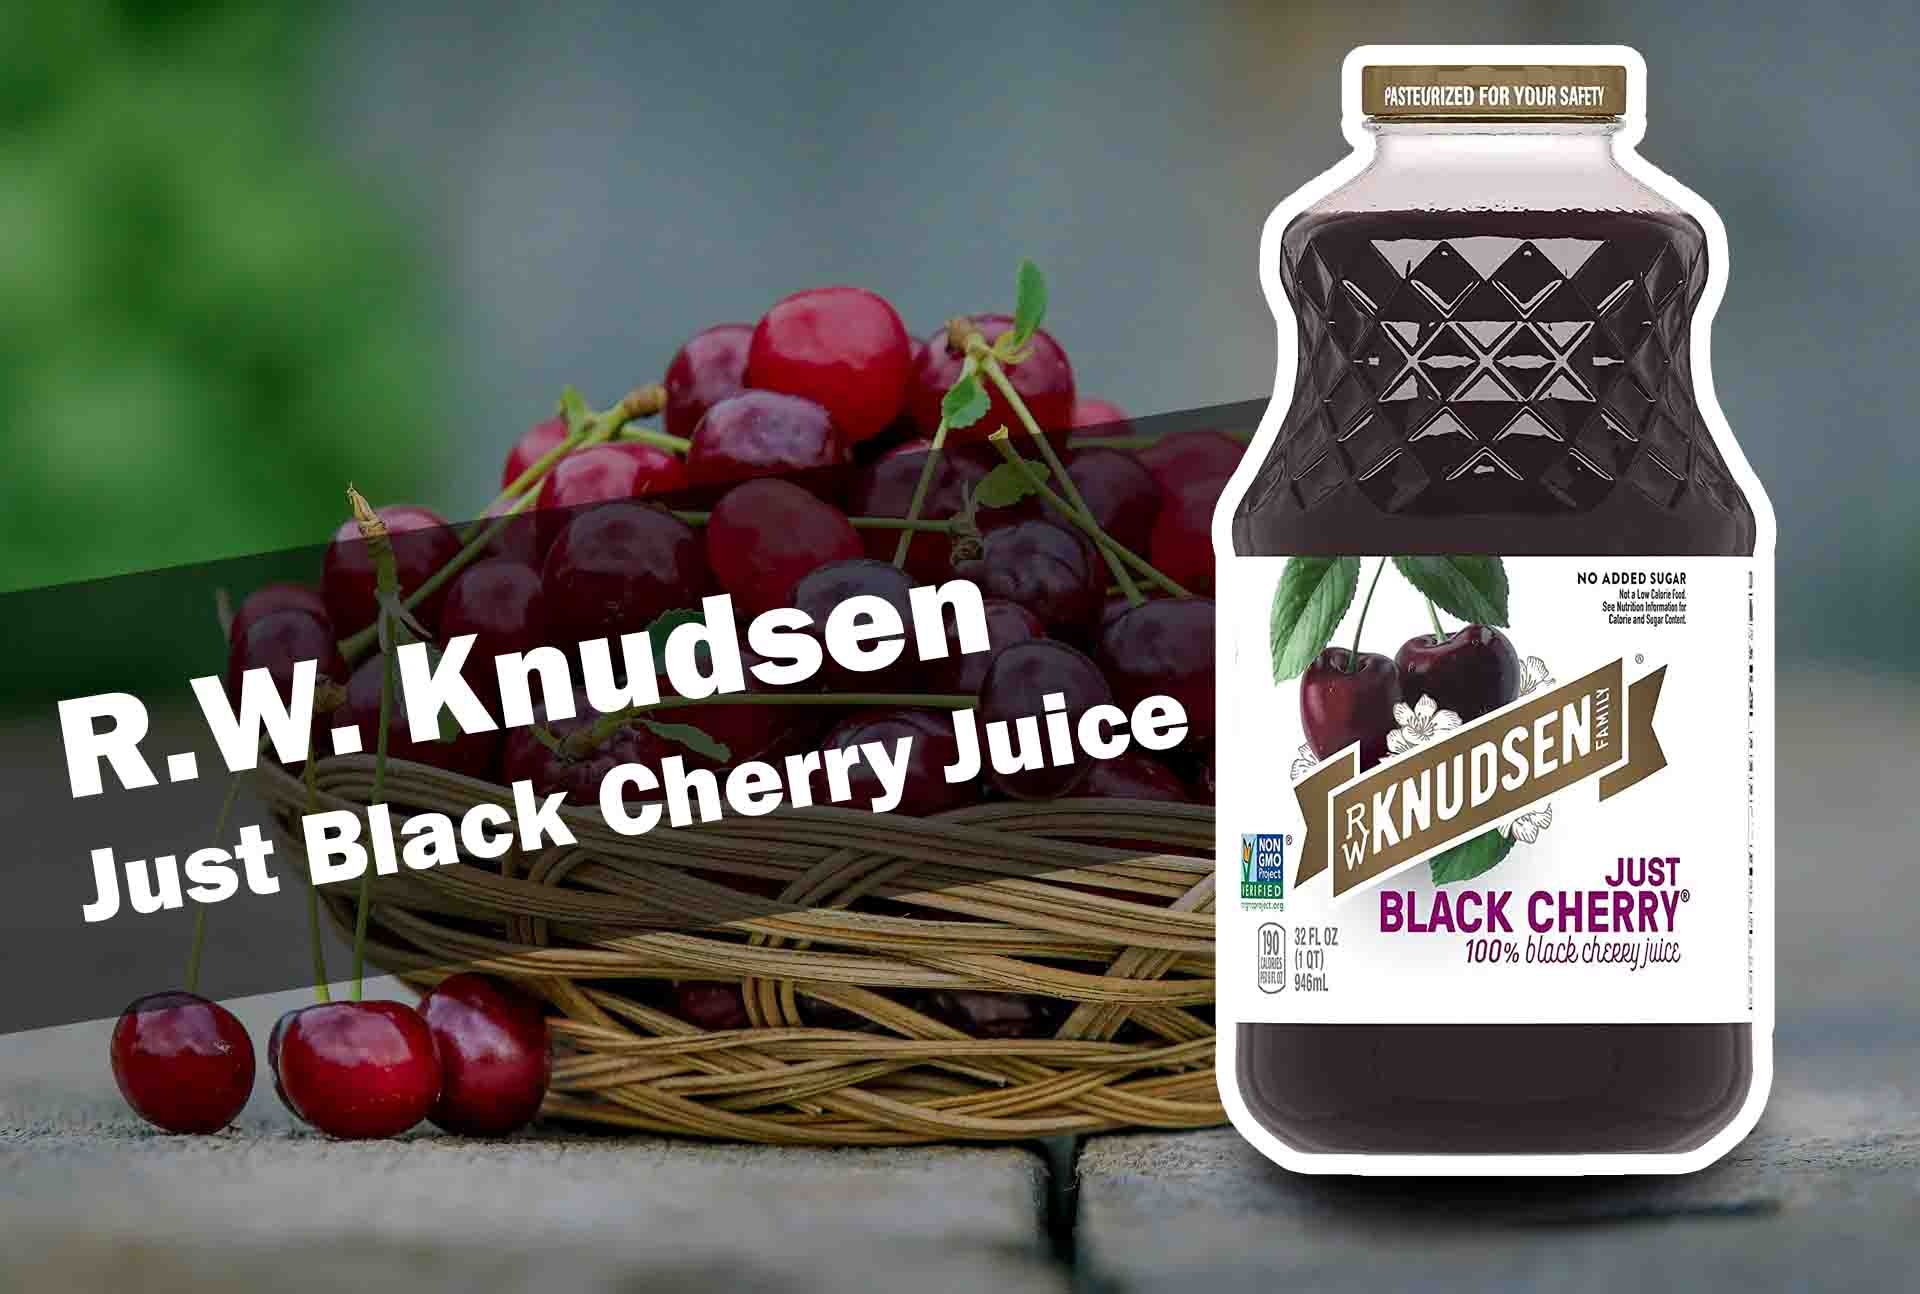 R.W. Knudsen Just Black Cherry Juice